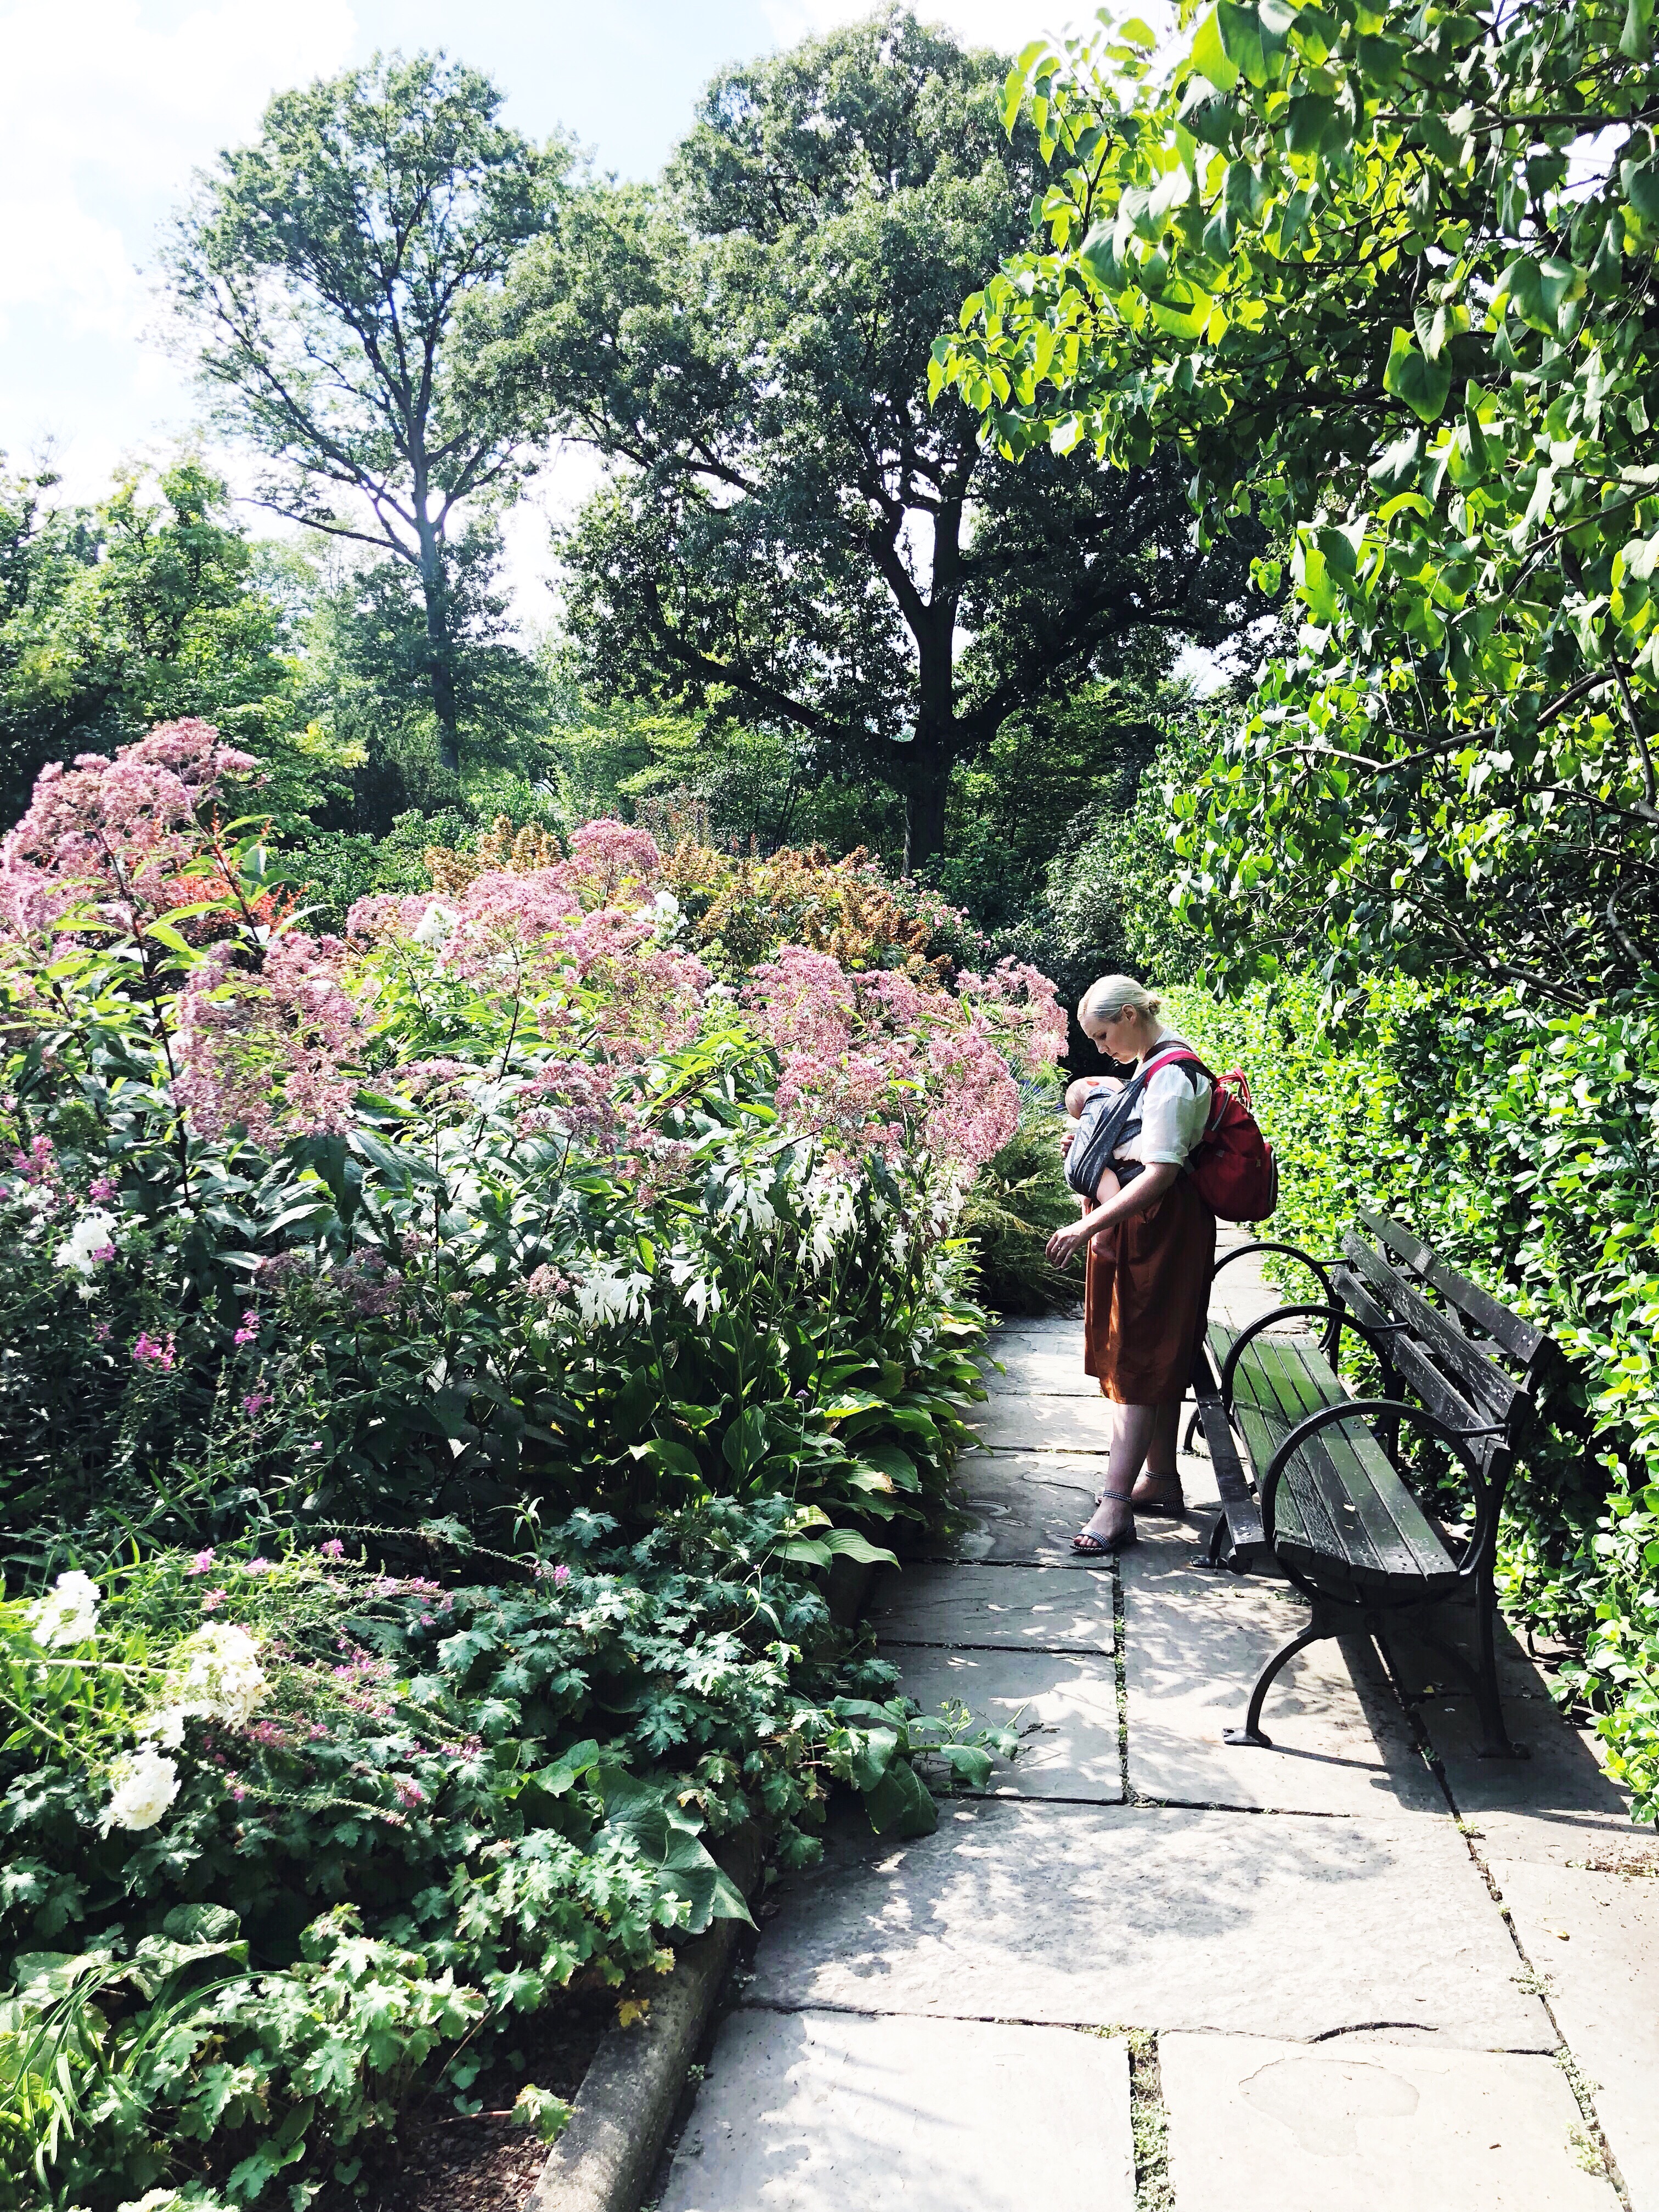 Central Park Conservatory garden